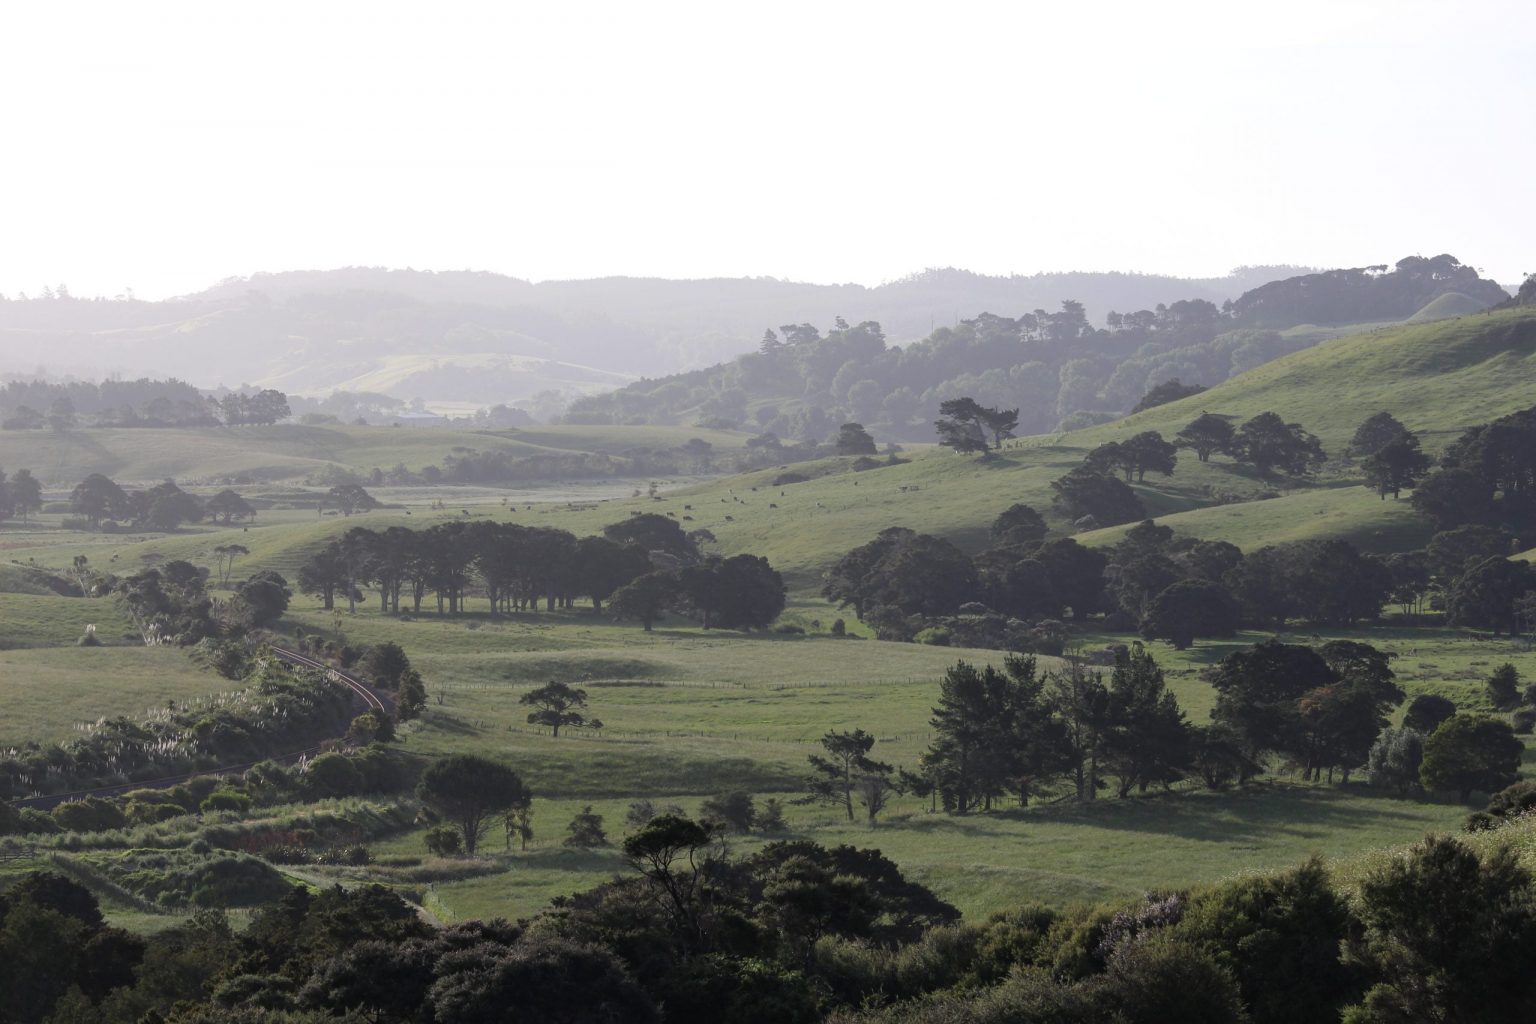 Kaipara Valley views with green paddocks and trees along the river